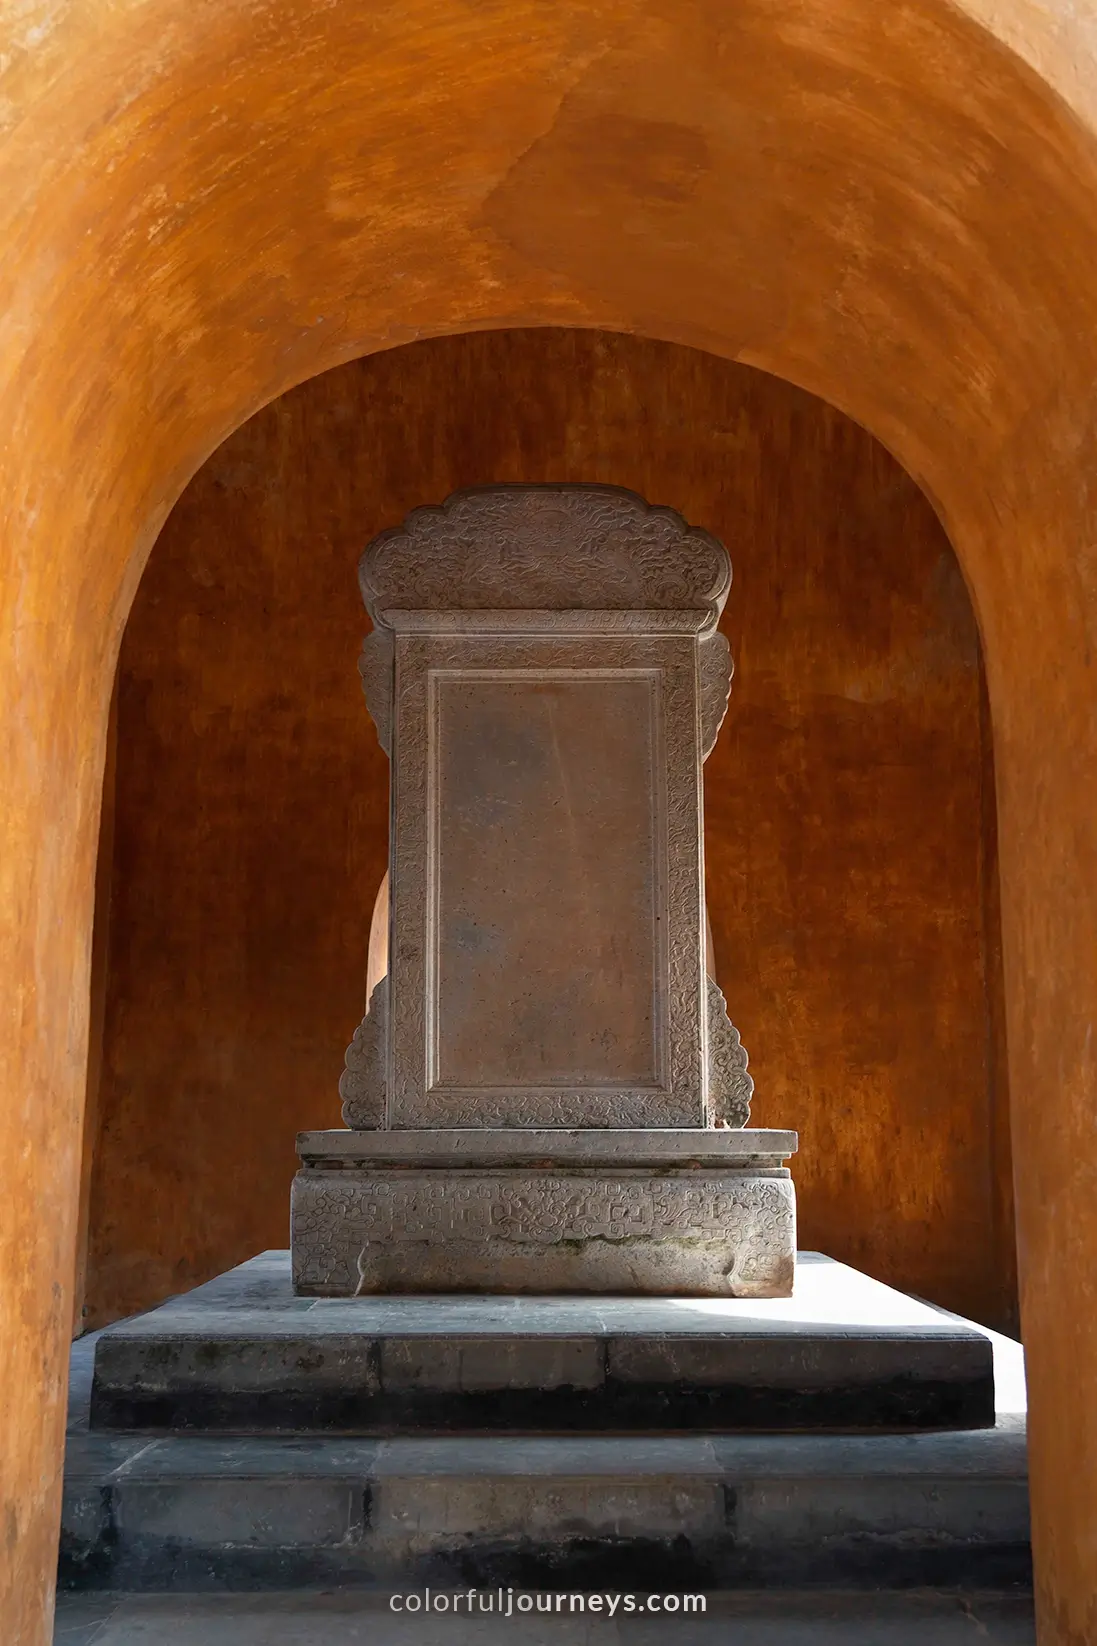 A stele at Thai Vuong tomb complex in Hue, Vietnam